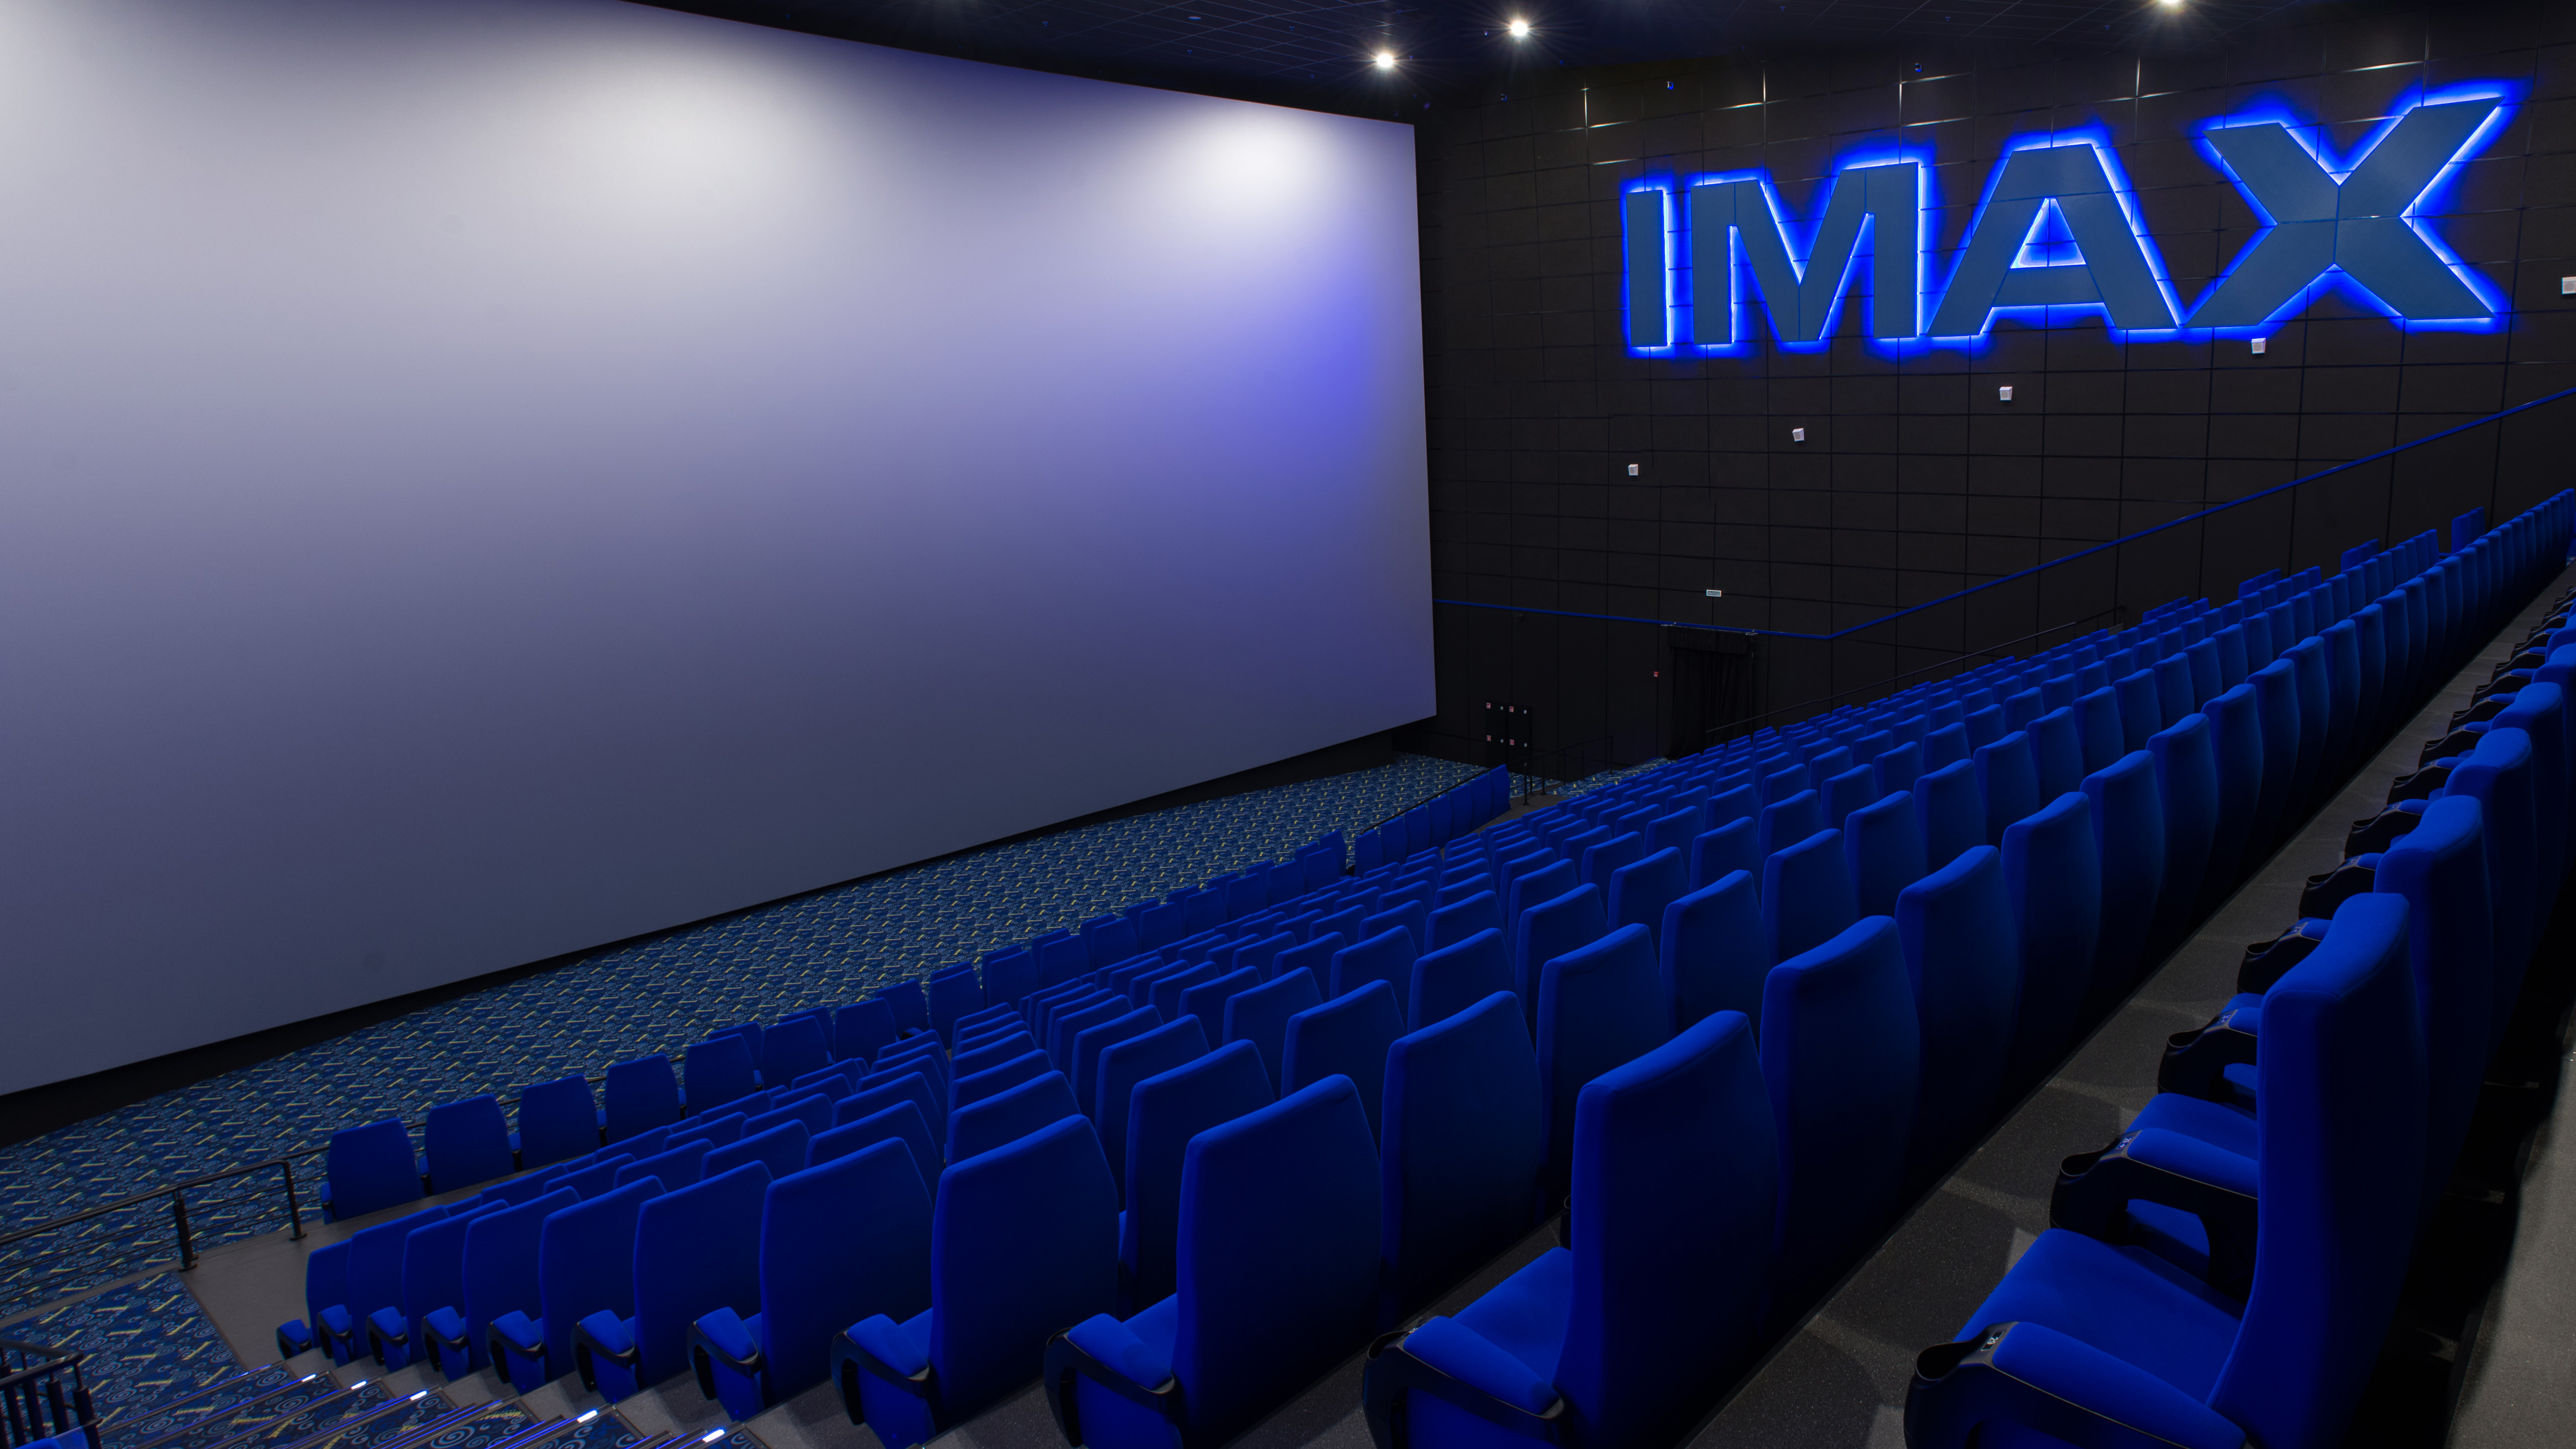 Киномакс пражская сеансы сегодня. Киномакс Самара зал IMAX. Cinema 9 IMAX Хабаровск. Киномакс IMAX Казань. Киномакс Липецк зал IMAX.